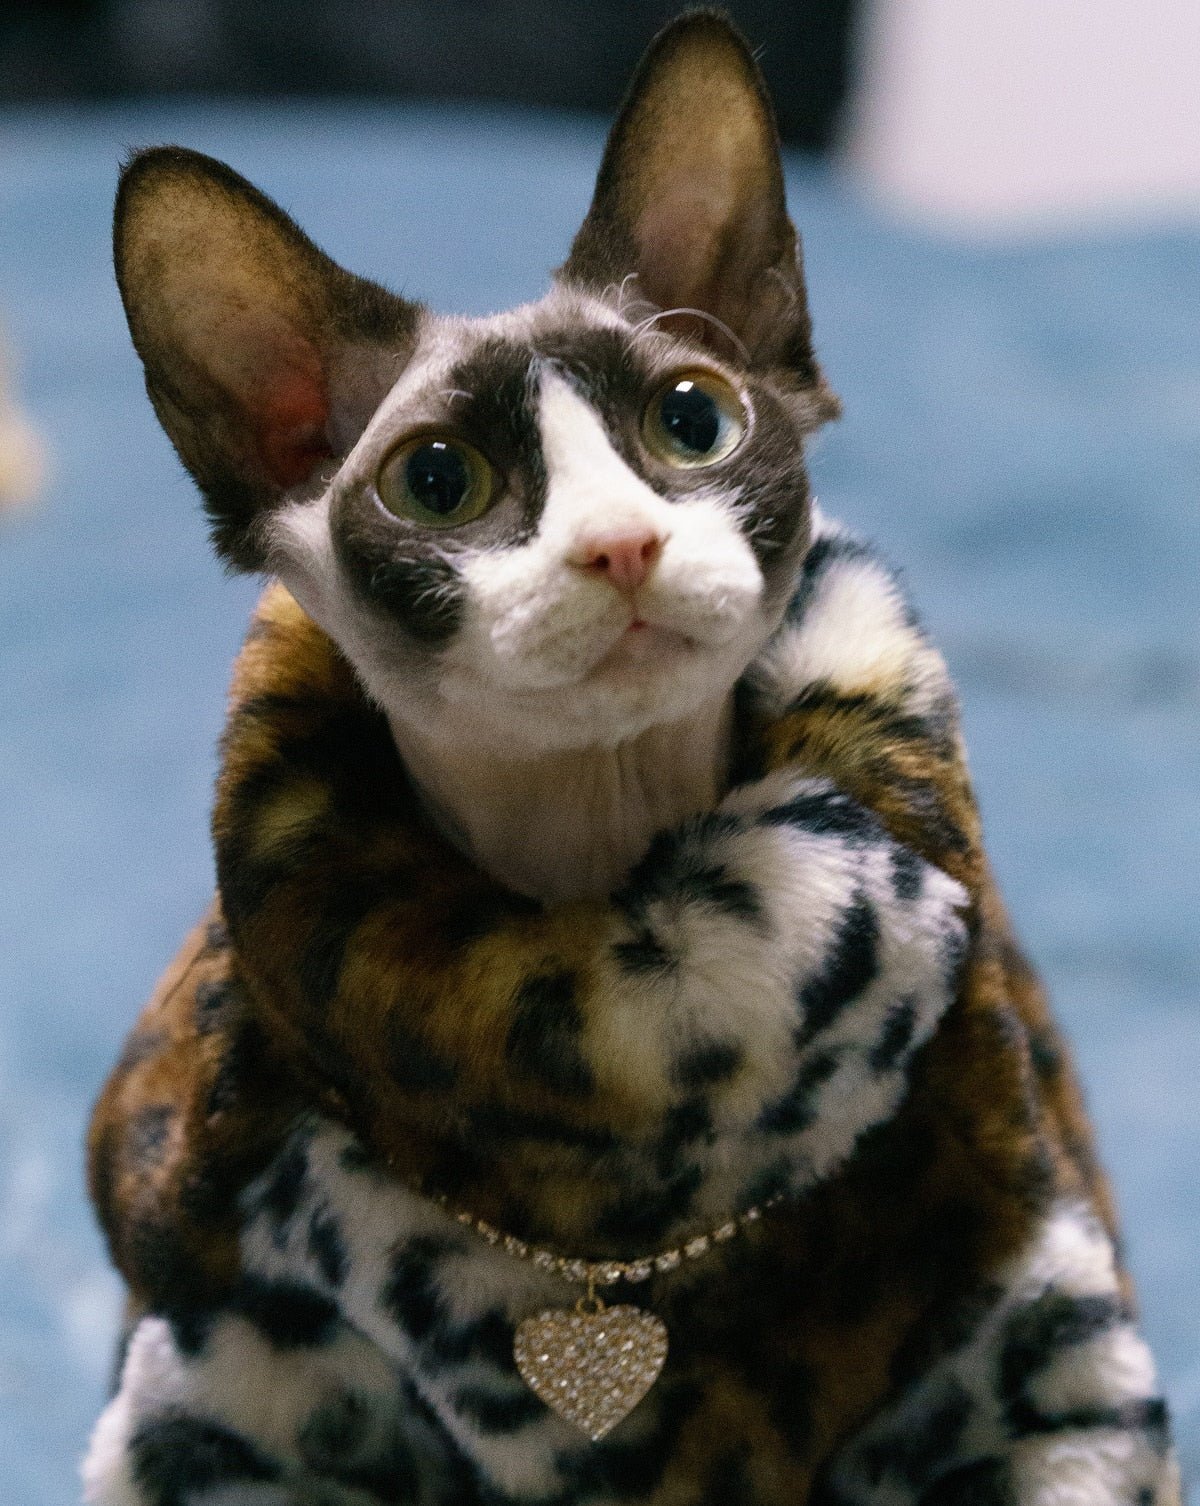 The Meow Boss' Luxury design cat jacket